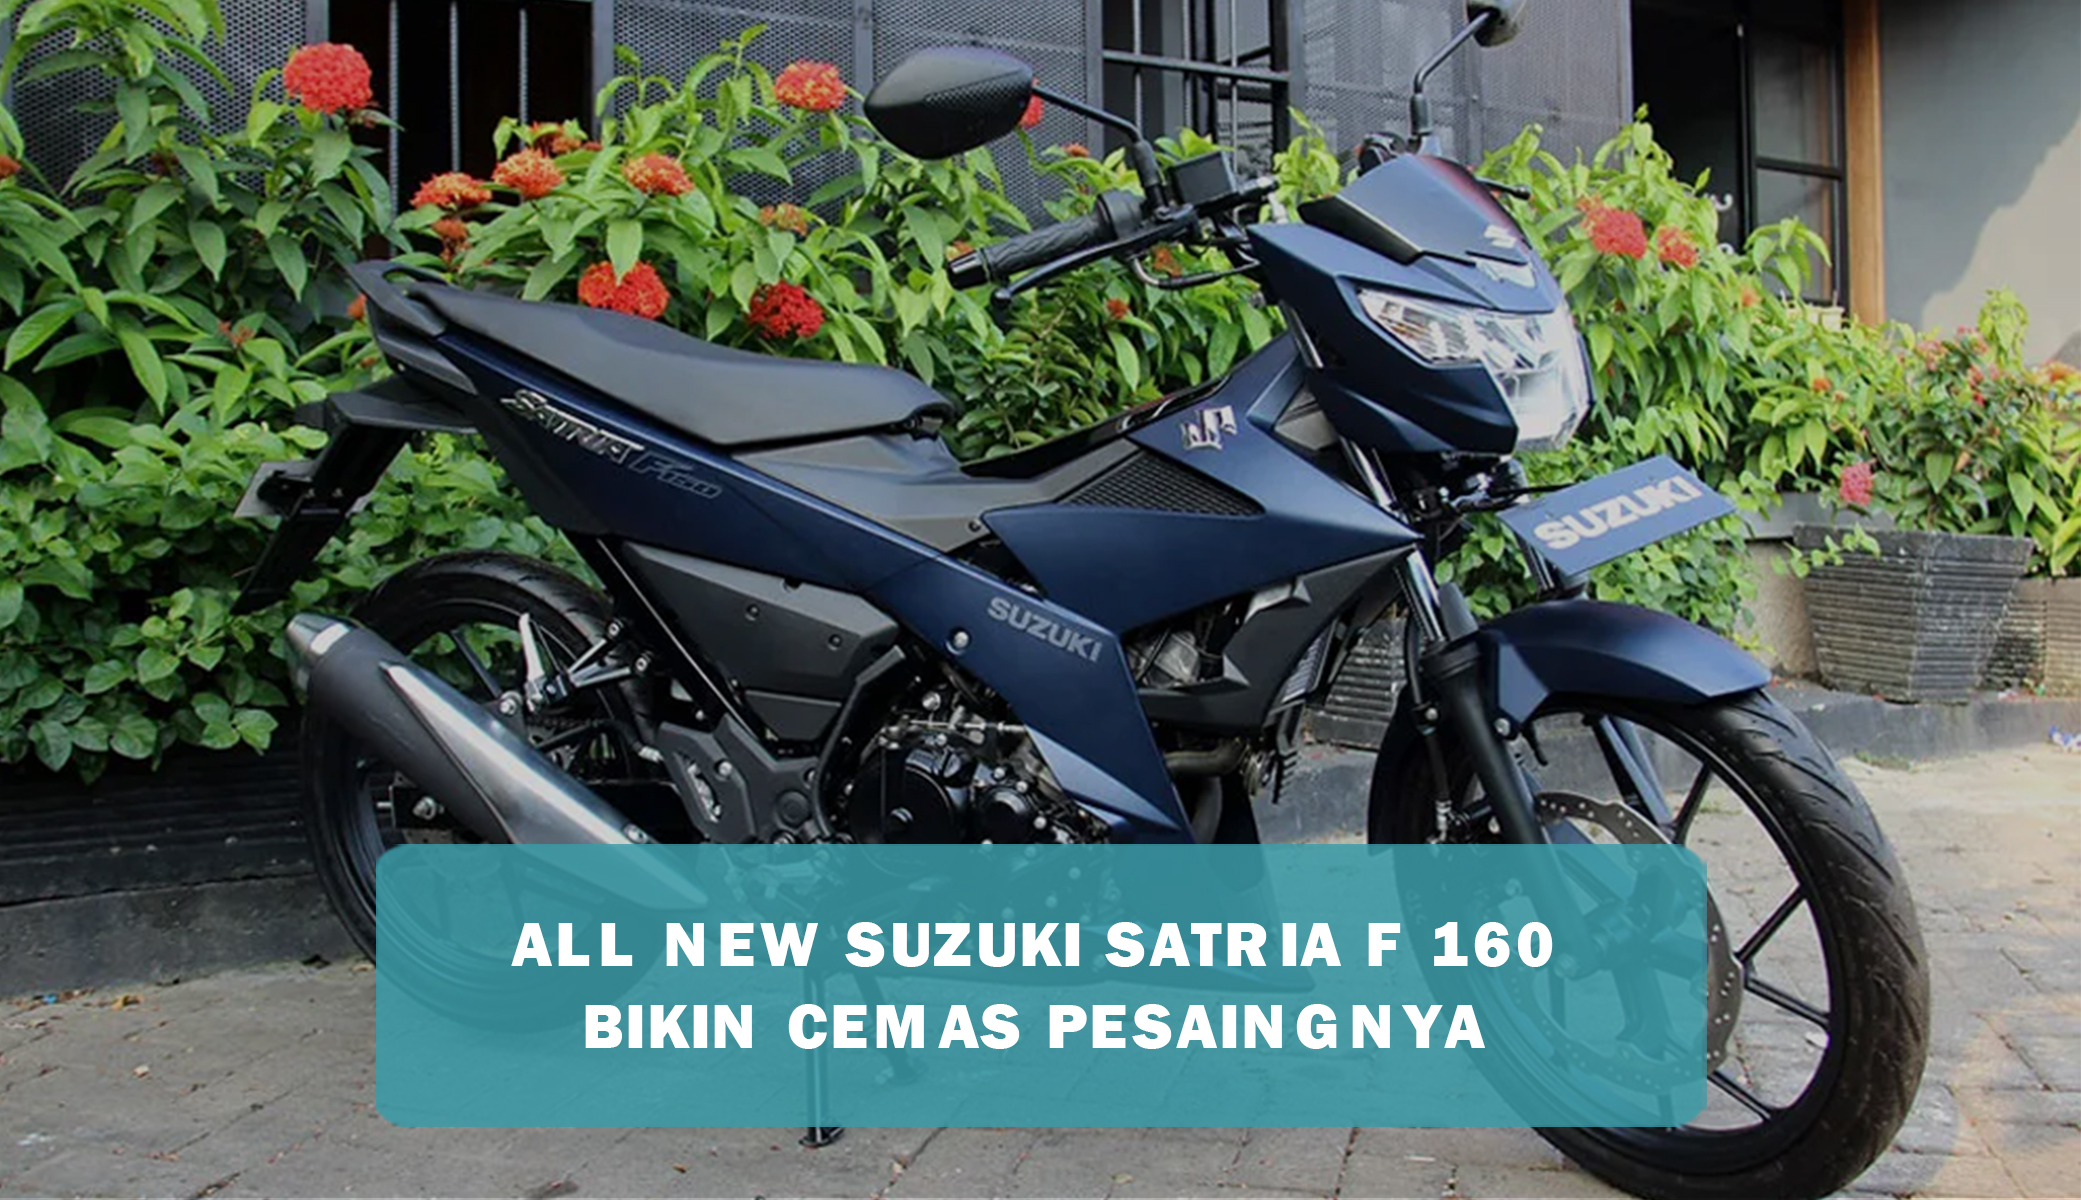 All New Suzuki Satria F 160 cc Peformanya Bikin Khawatir MX King, Bakal Jadi Motor Bebek Racing Andalan Nih